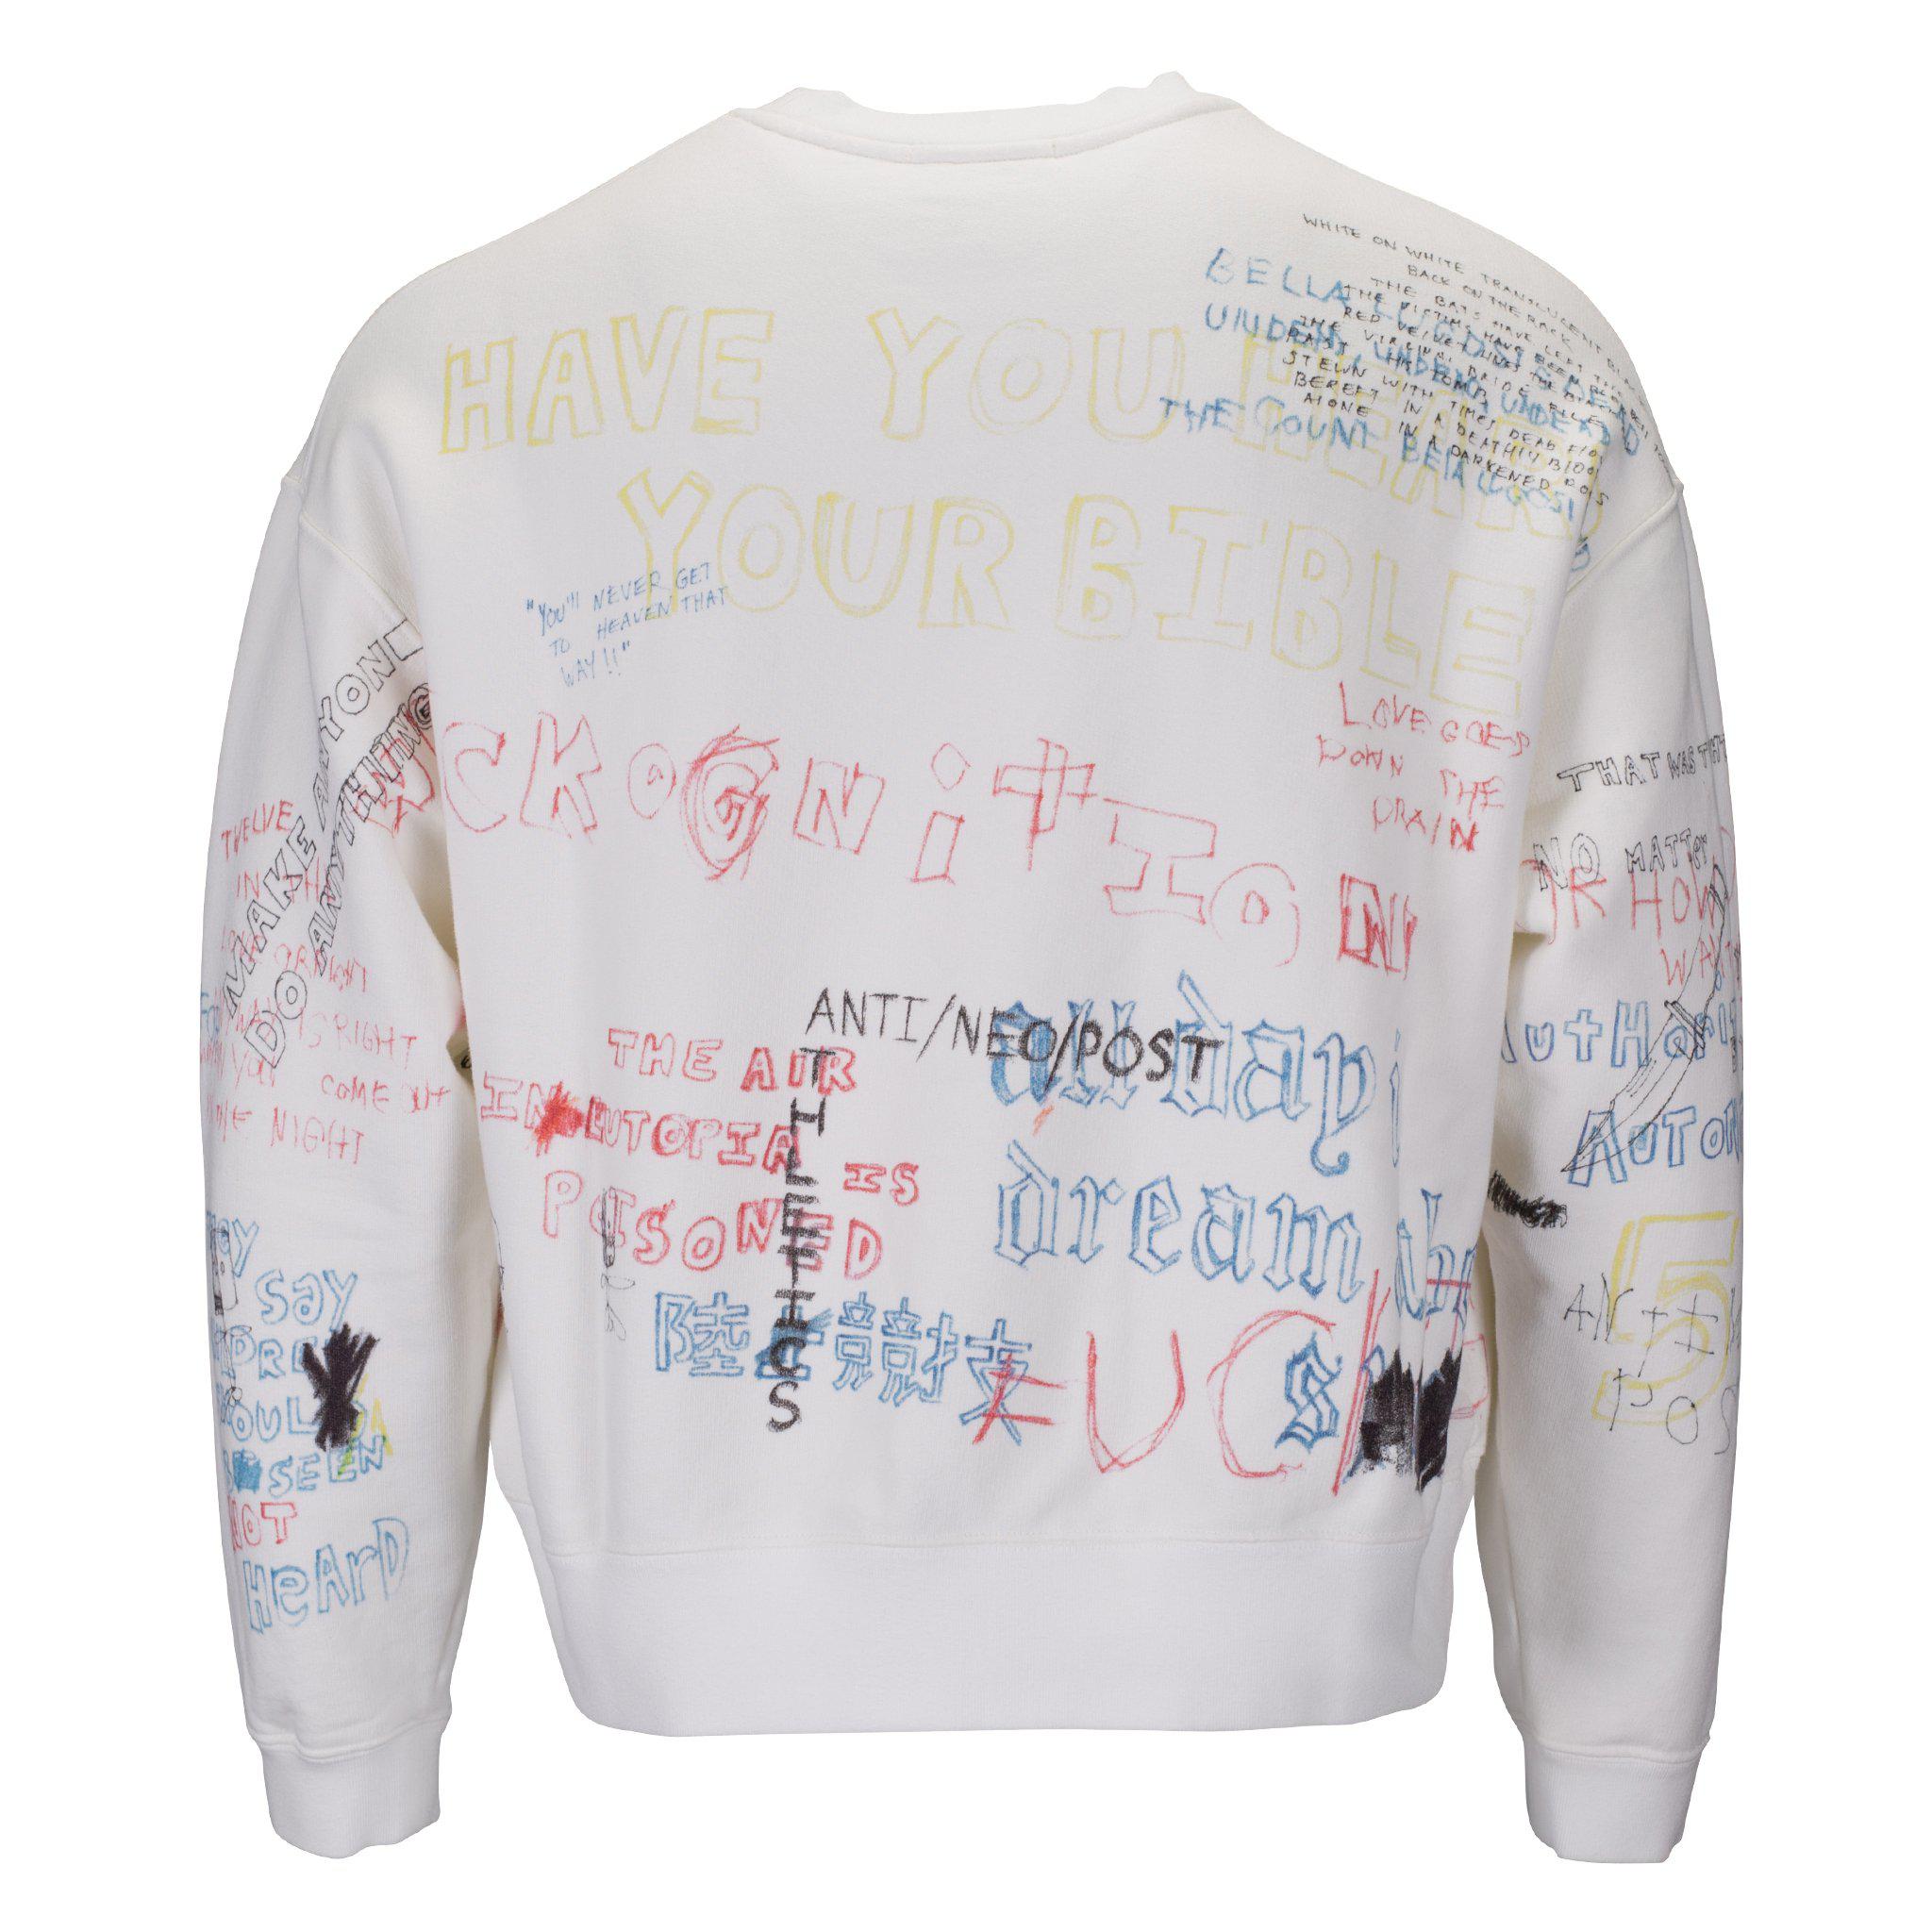 yeezy scribble sweater